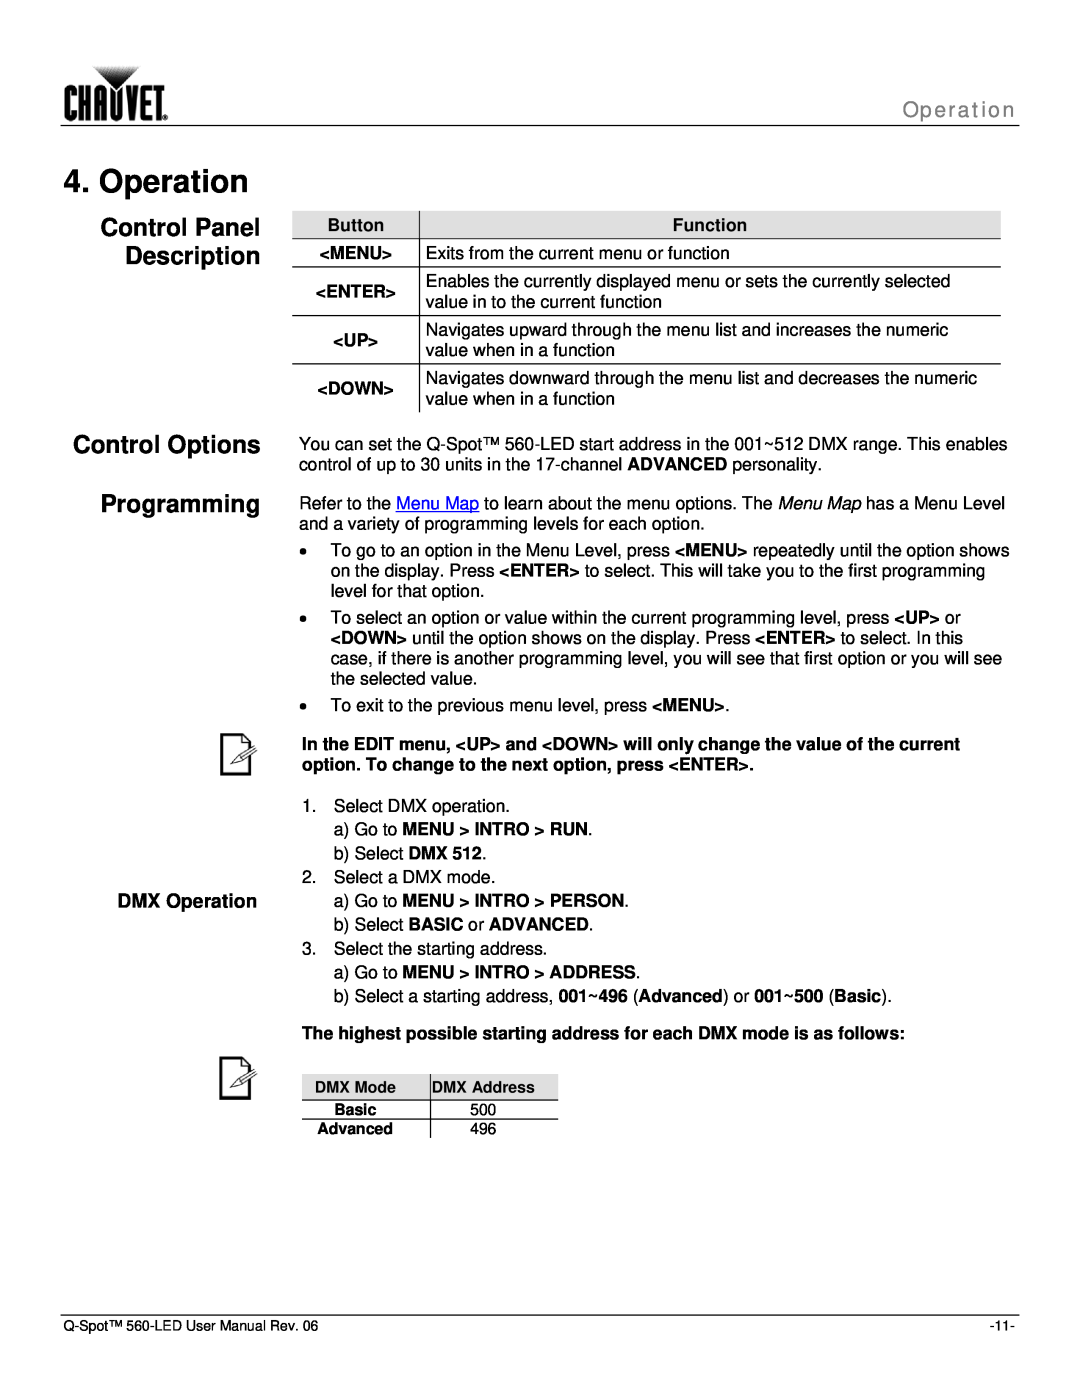 Chauvet 560 user manual Control Options Programming, Control Panel Description, DMX Operation 